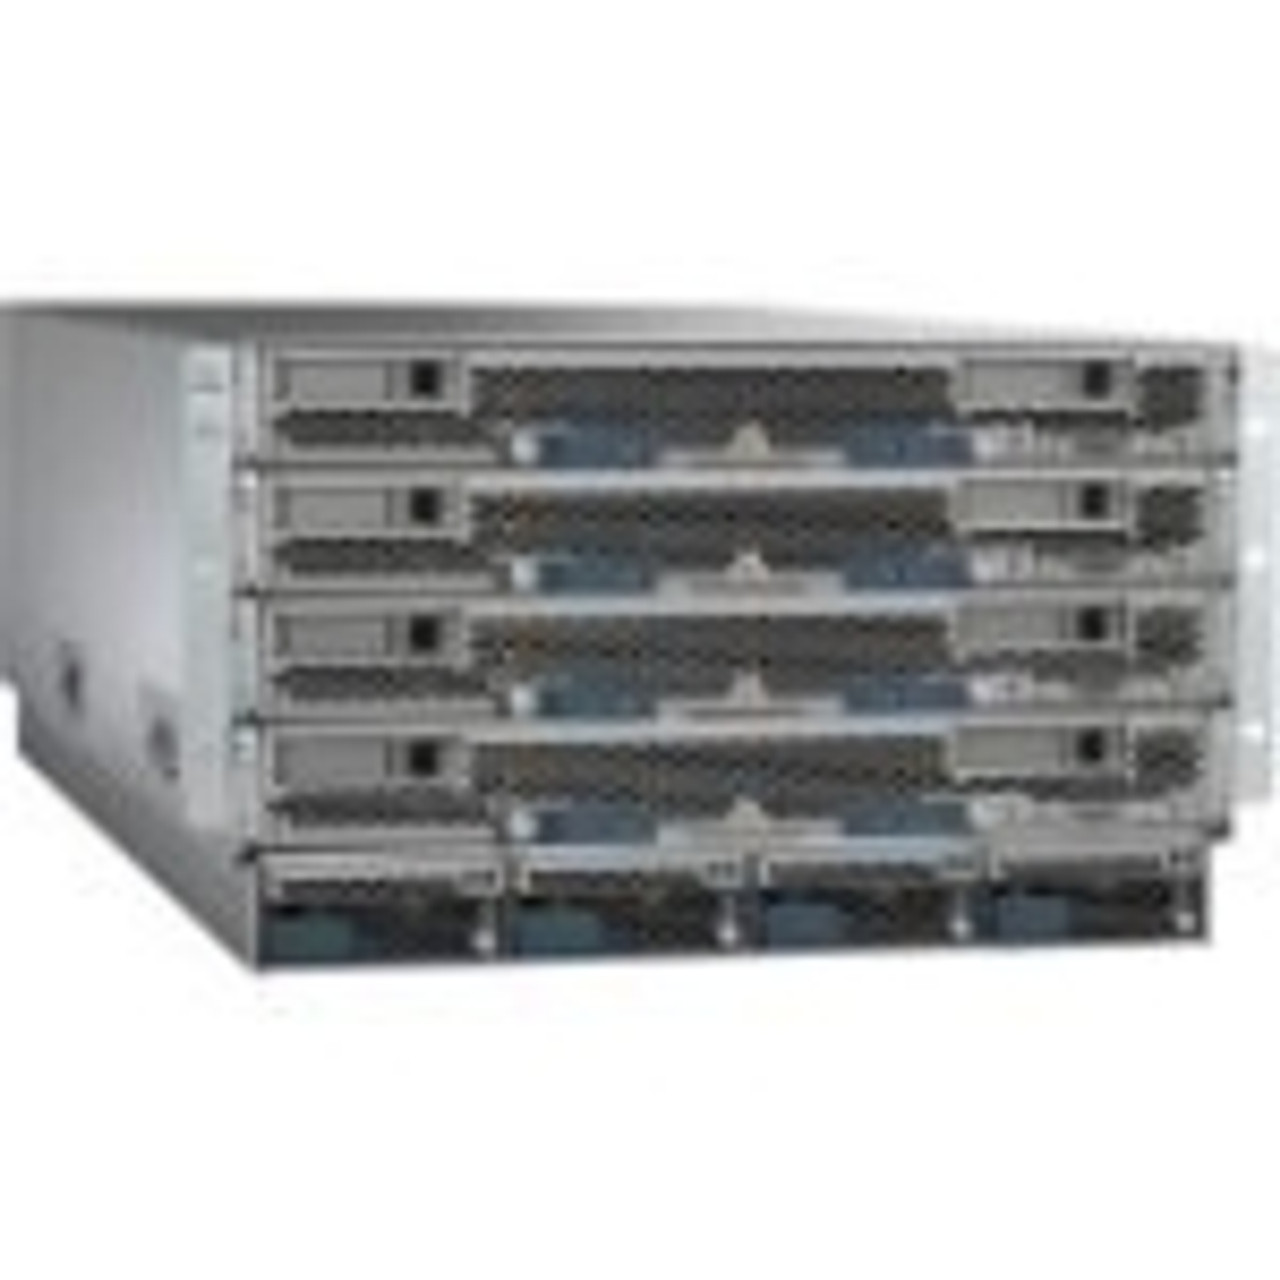 UCS-MINI-SEED-5108 Cisco UCS 5108 Blade Server AC2 Chassis w/FI 6324 No Blades (Refurbished)